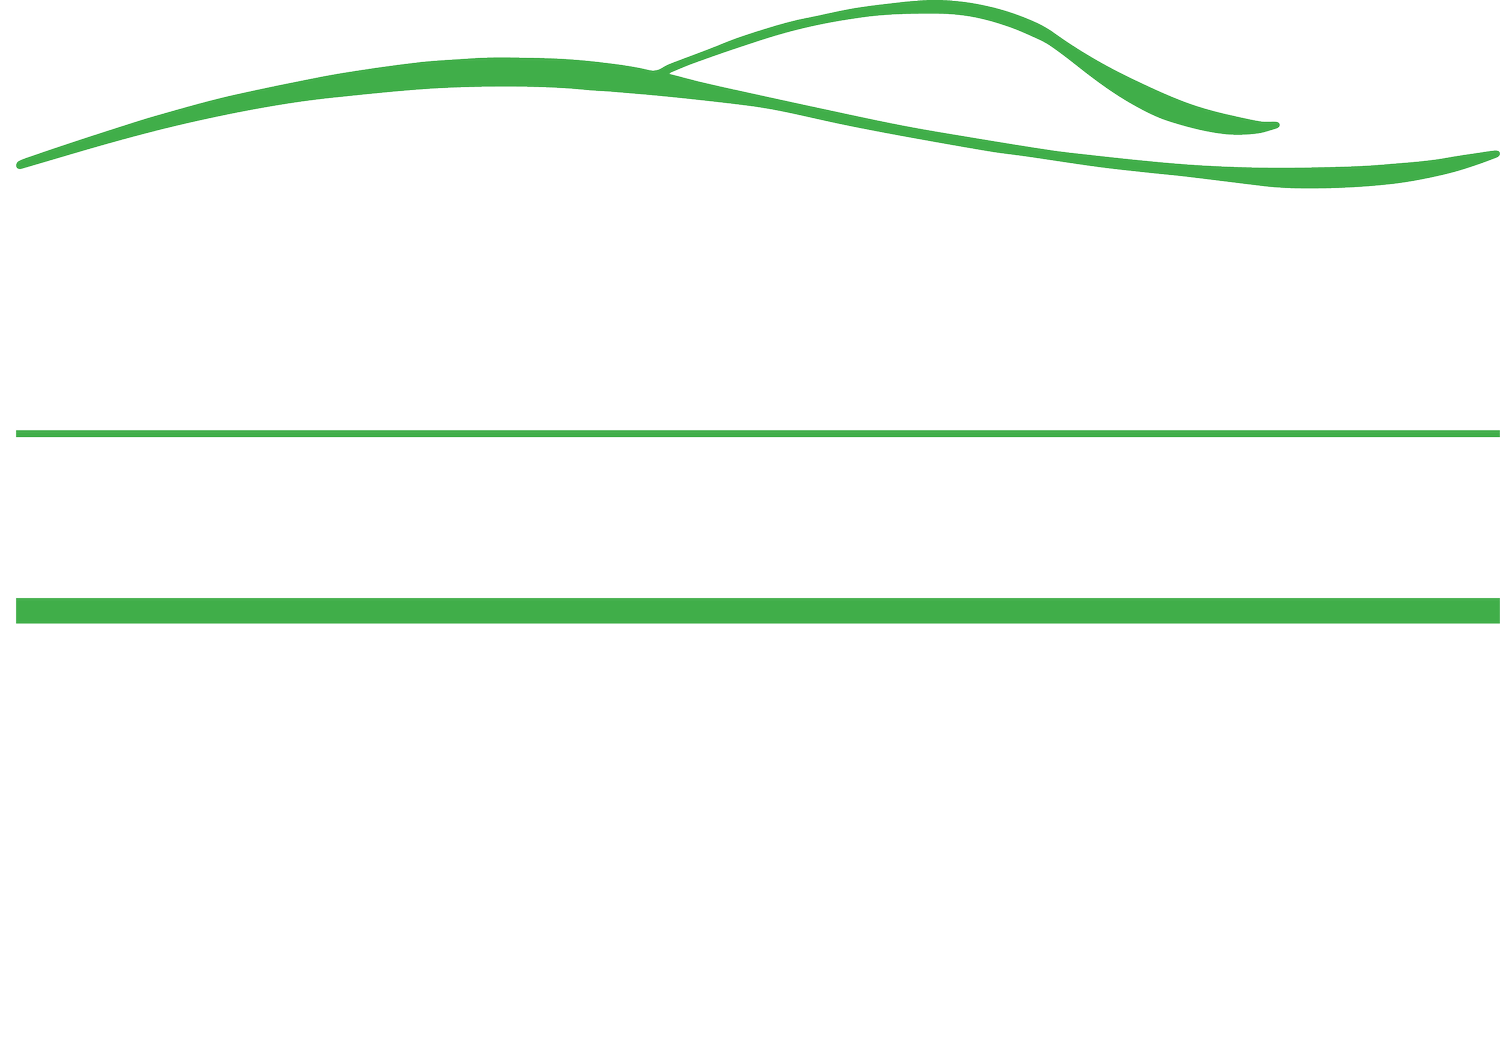 Piedmont Sleep Center